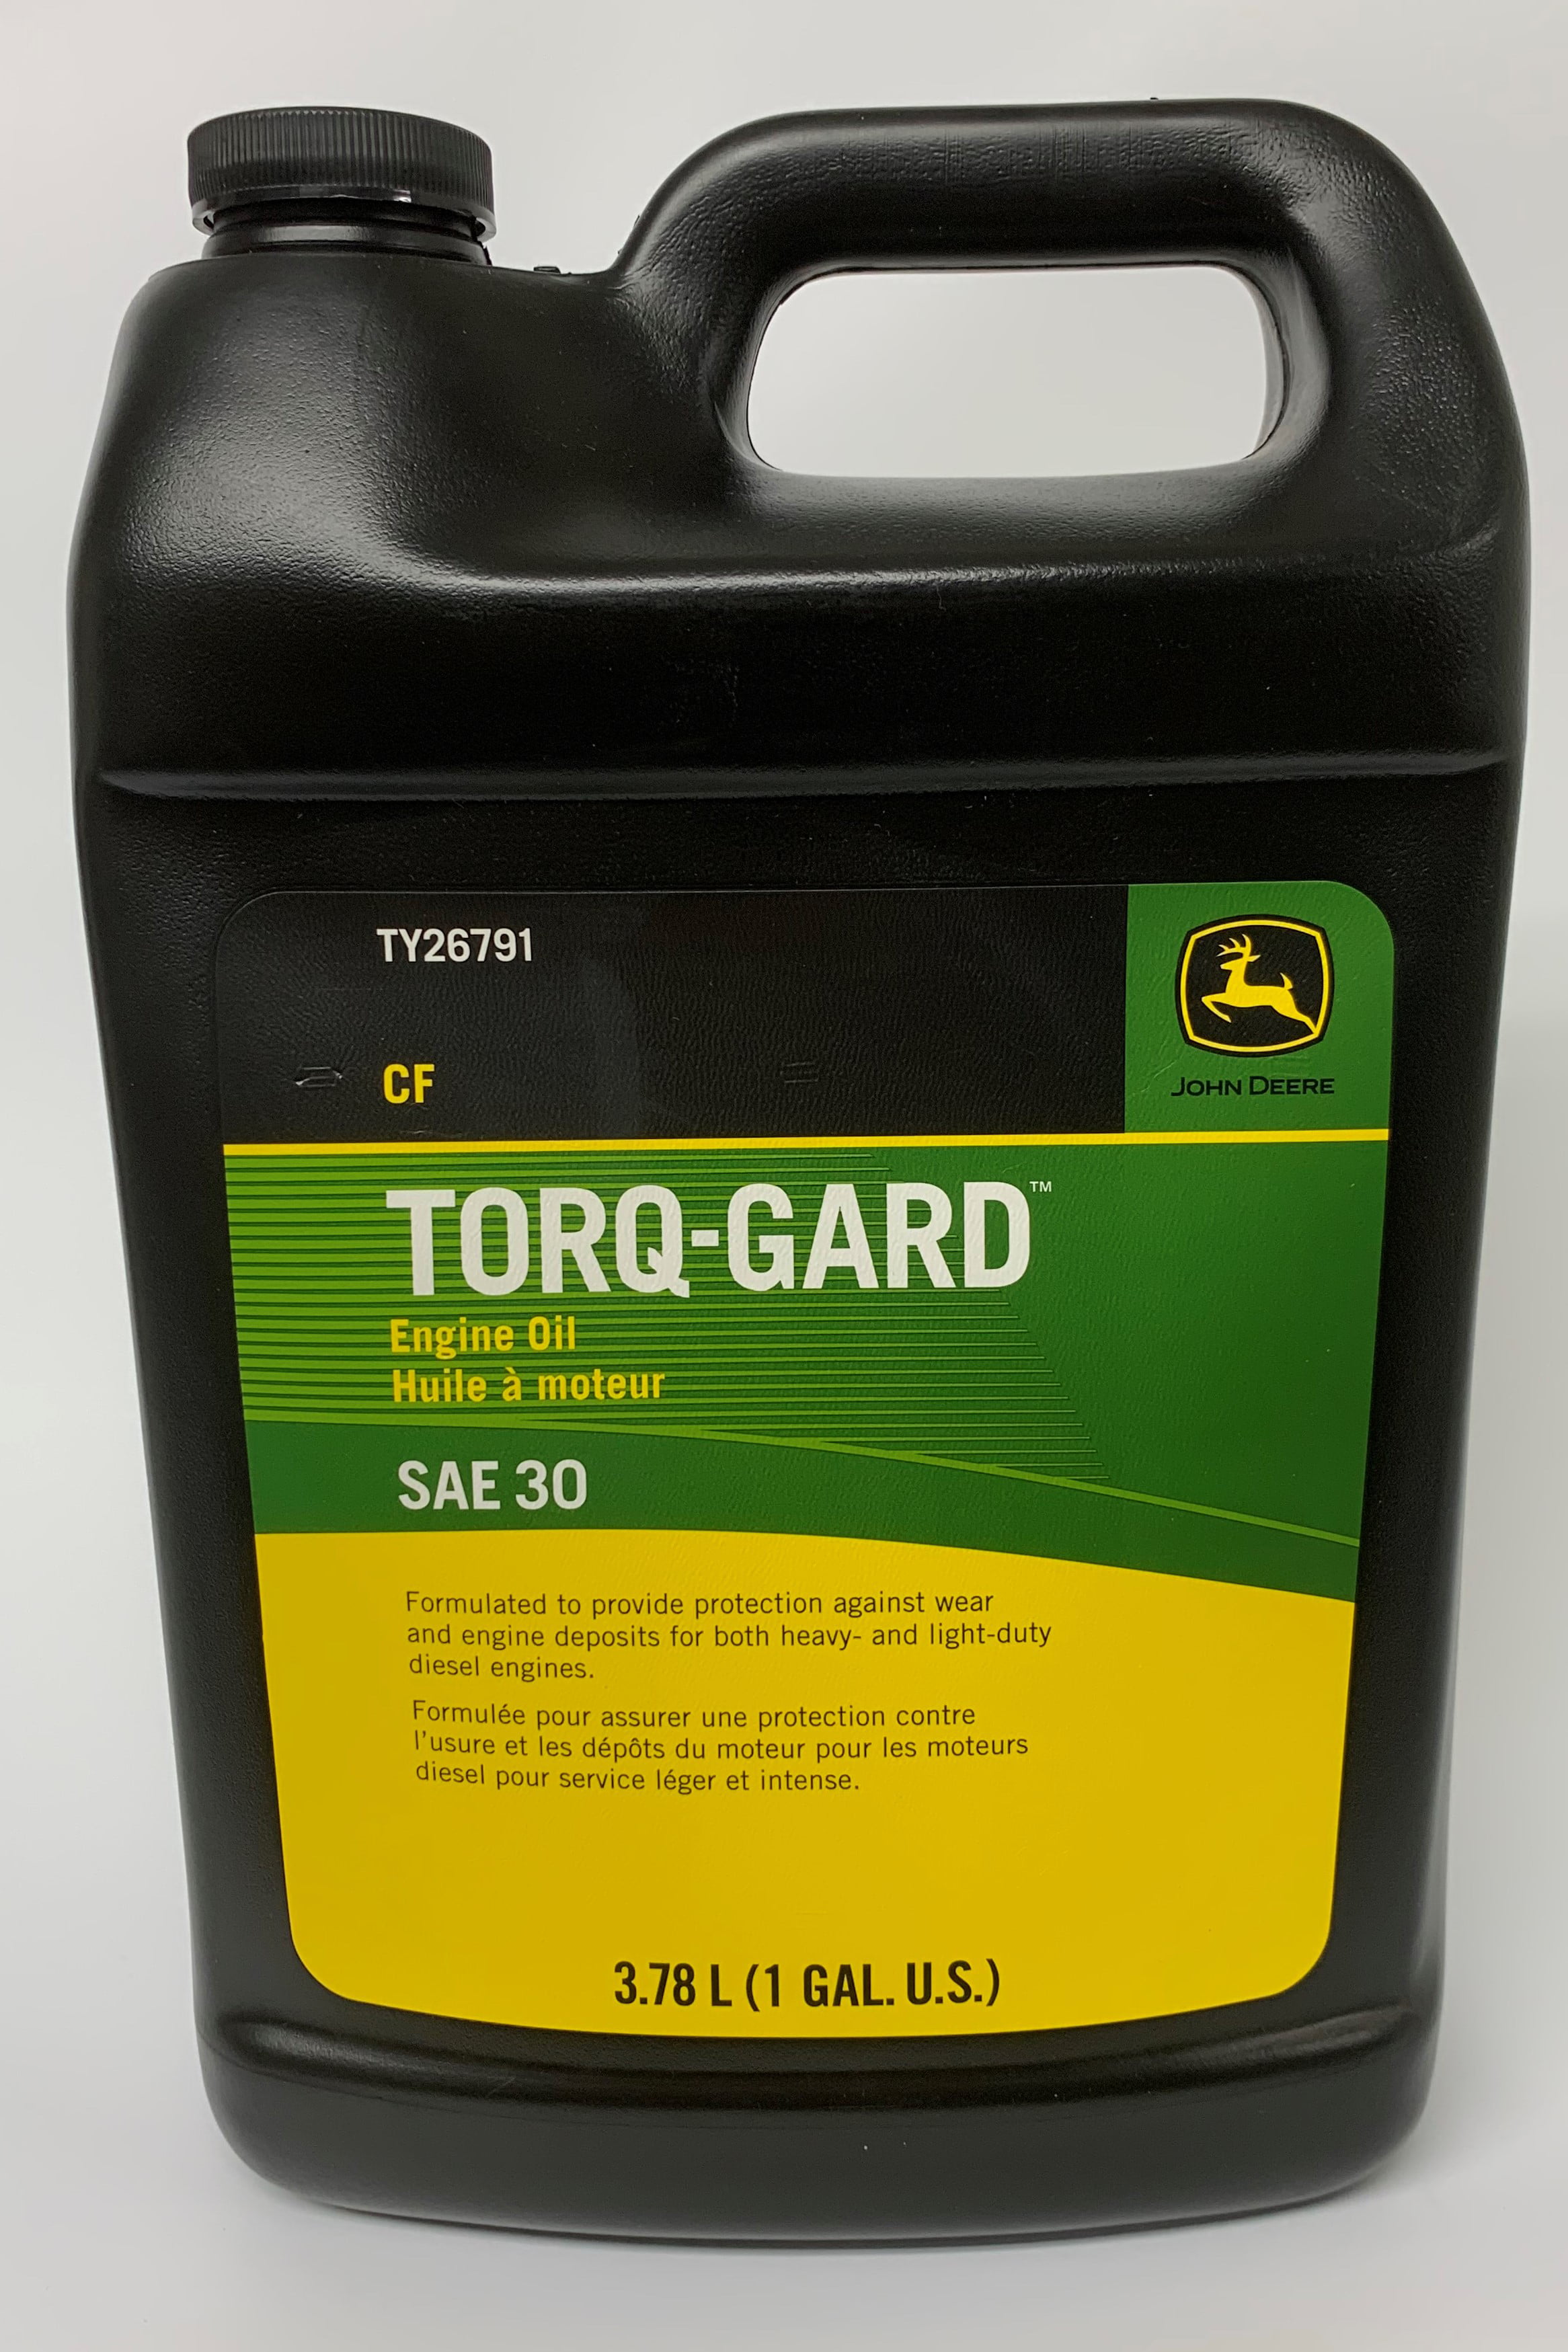 John Deere Sae 30 Torq Gard Engine Oil Ty26791 1 Gallon